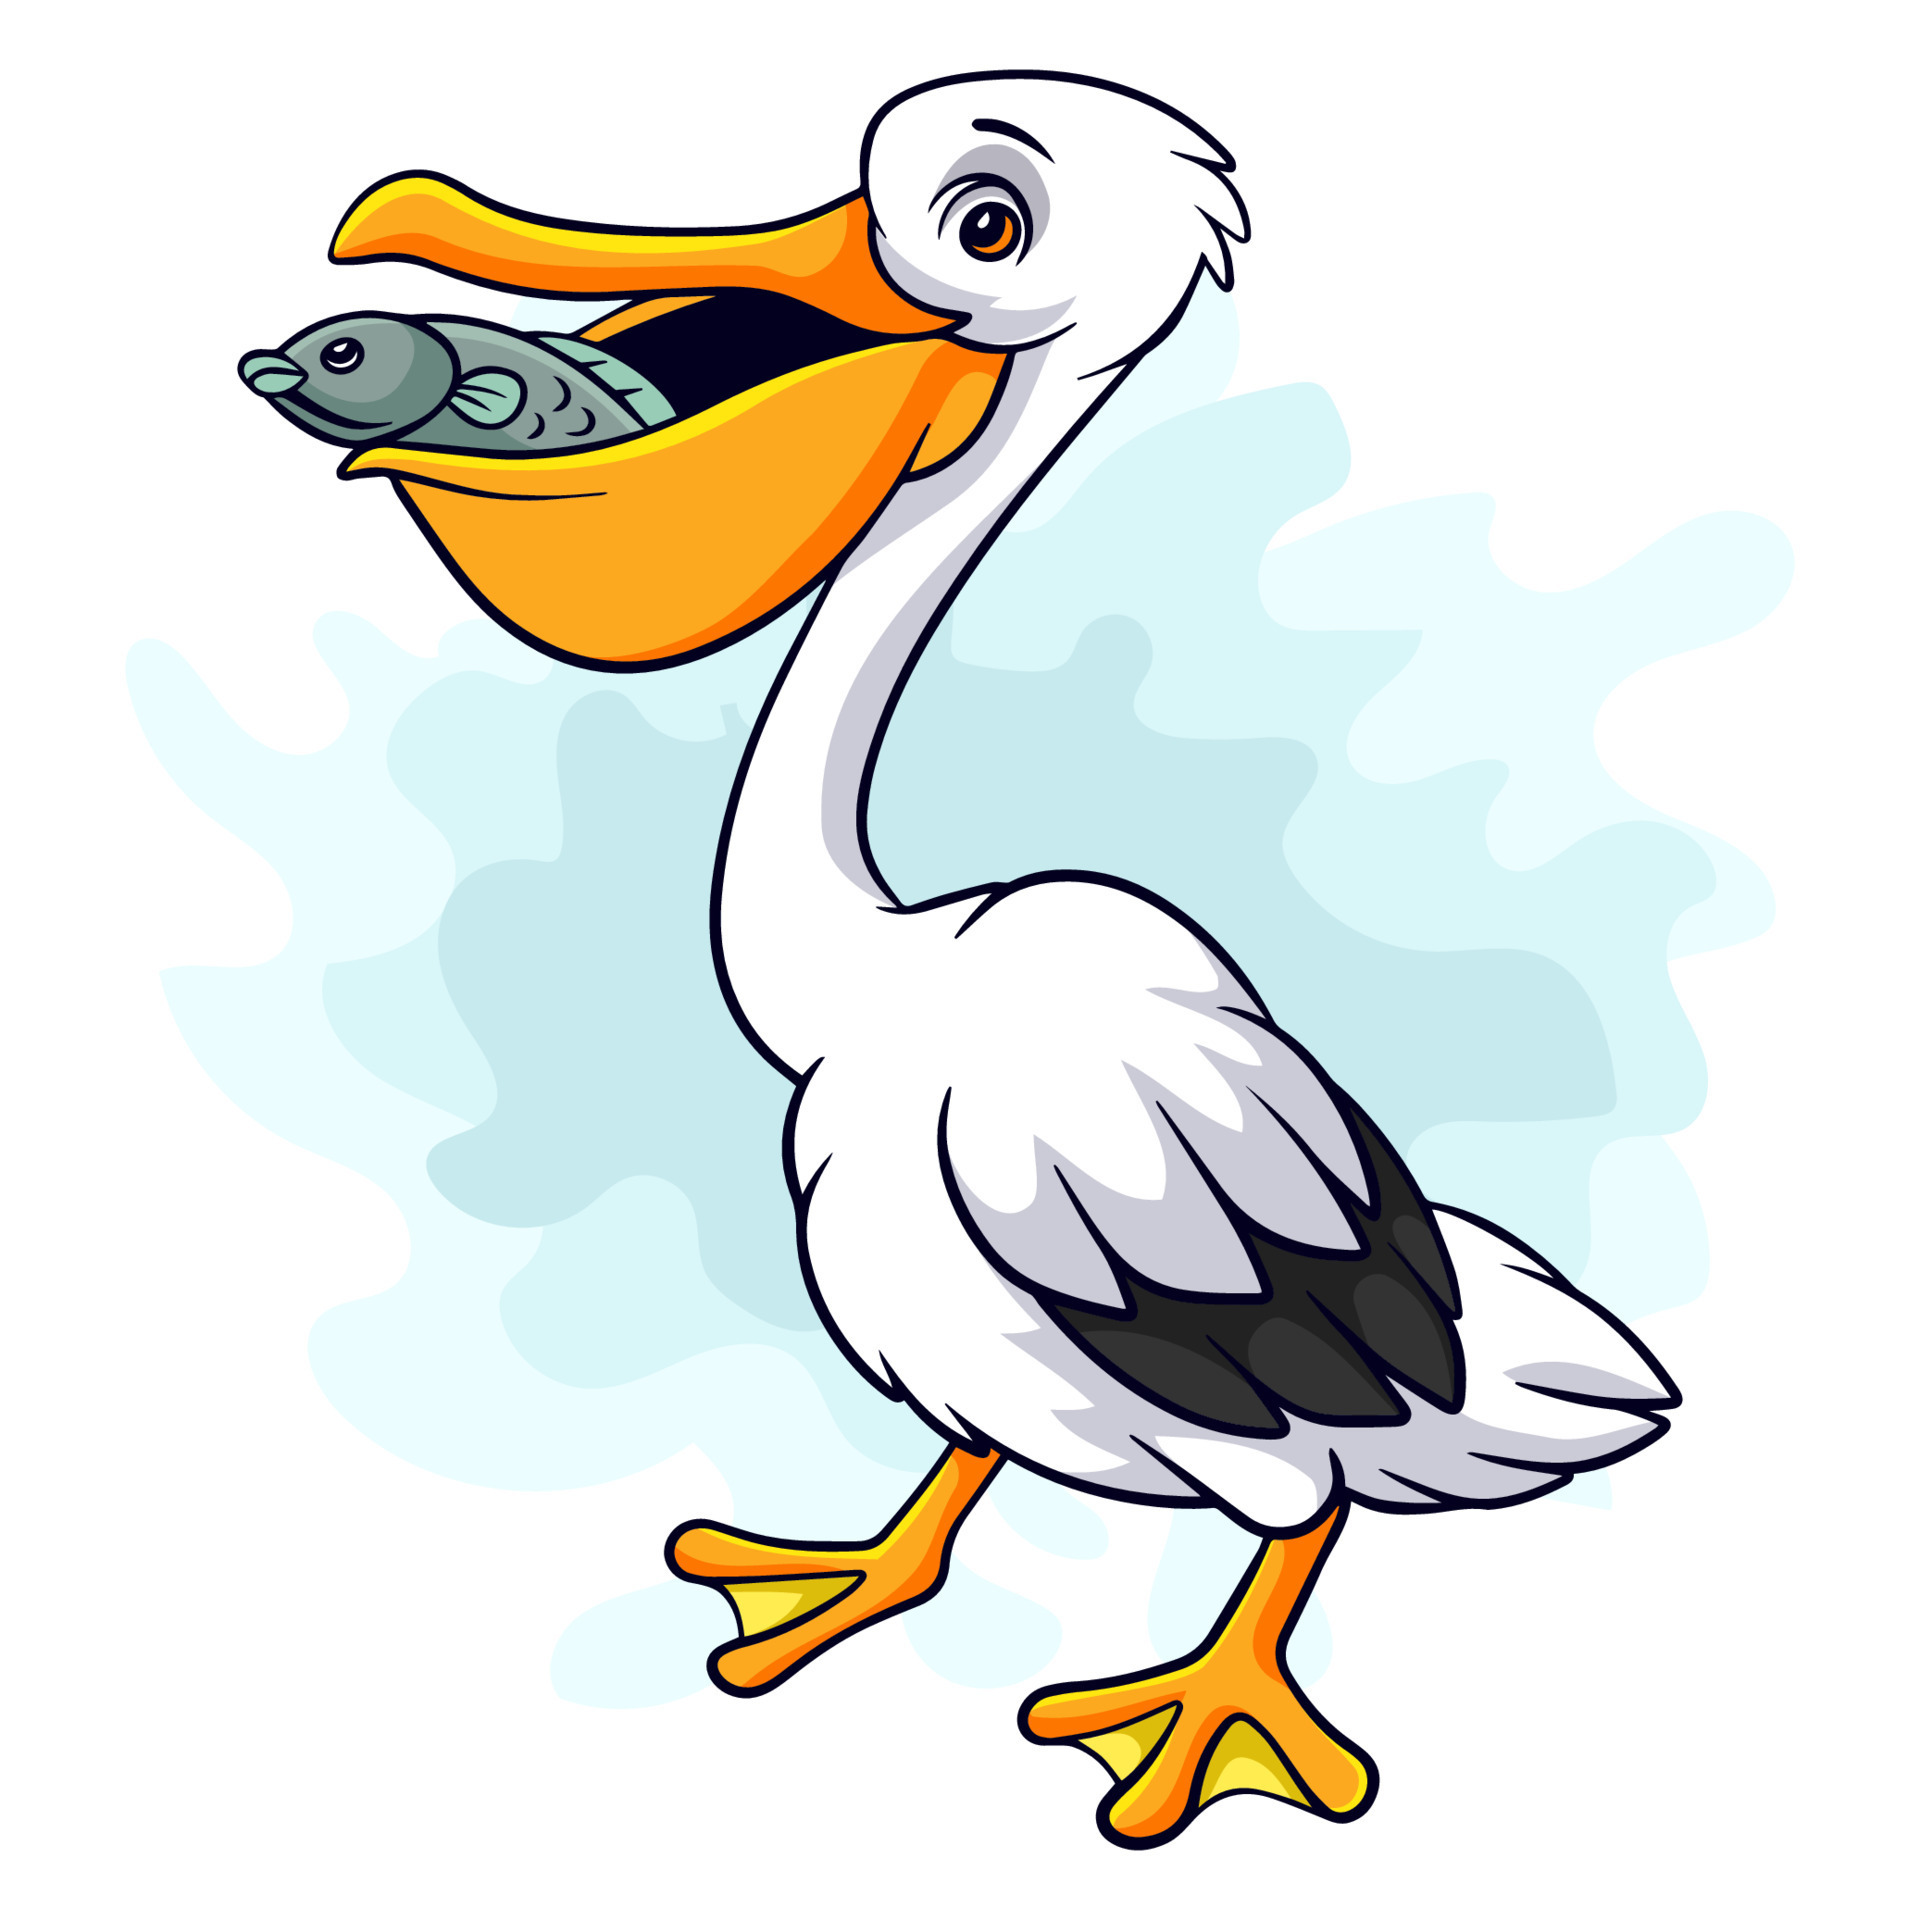 pássaro pelicano engraçado dos desenhos animados isolado no fundo branco  16245826 Vetor no Vecteezy